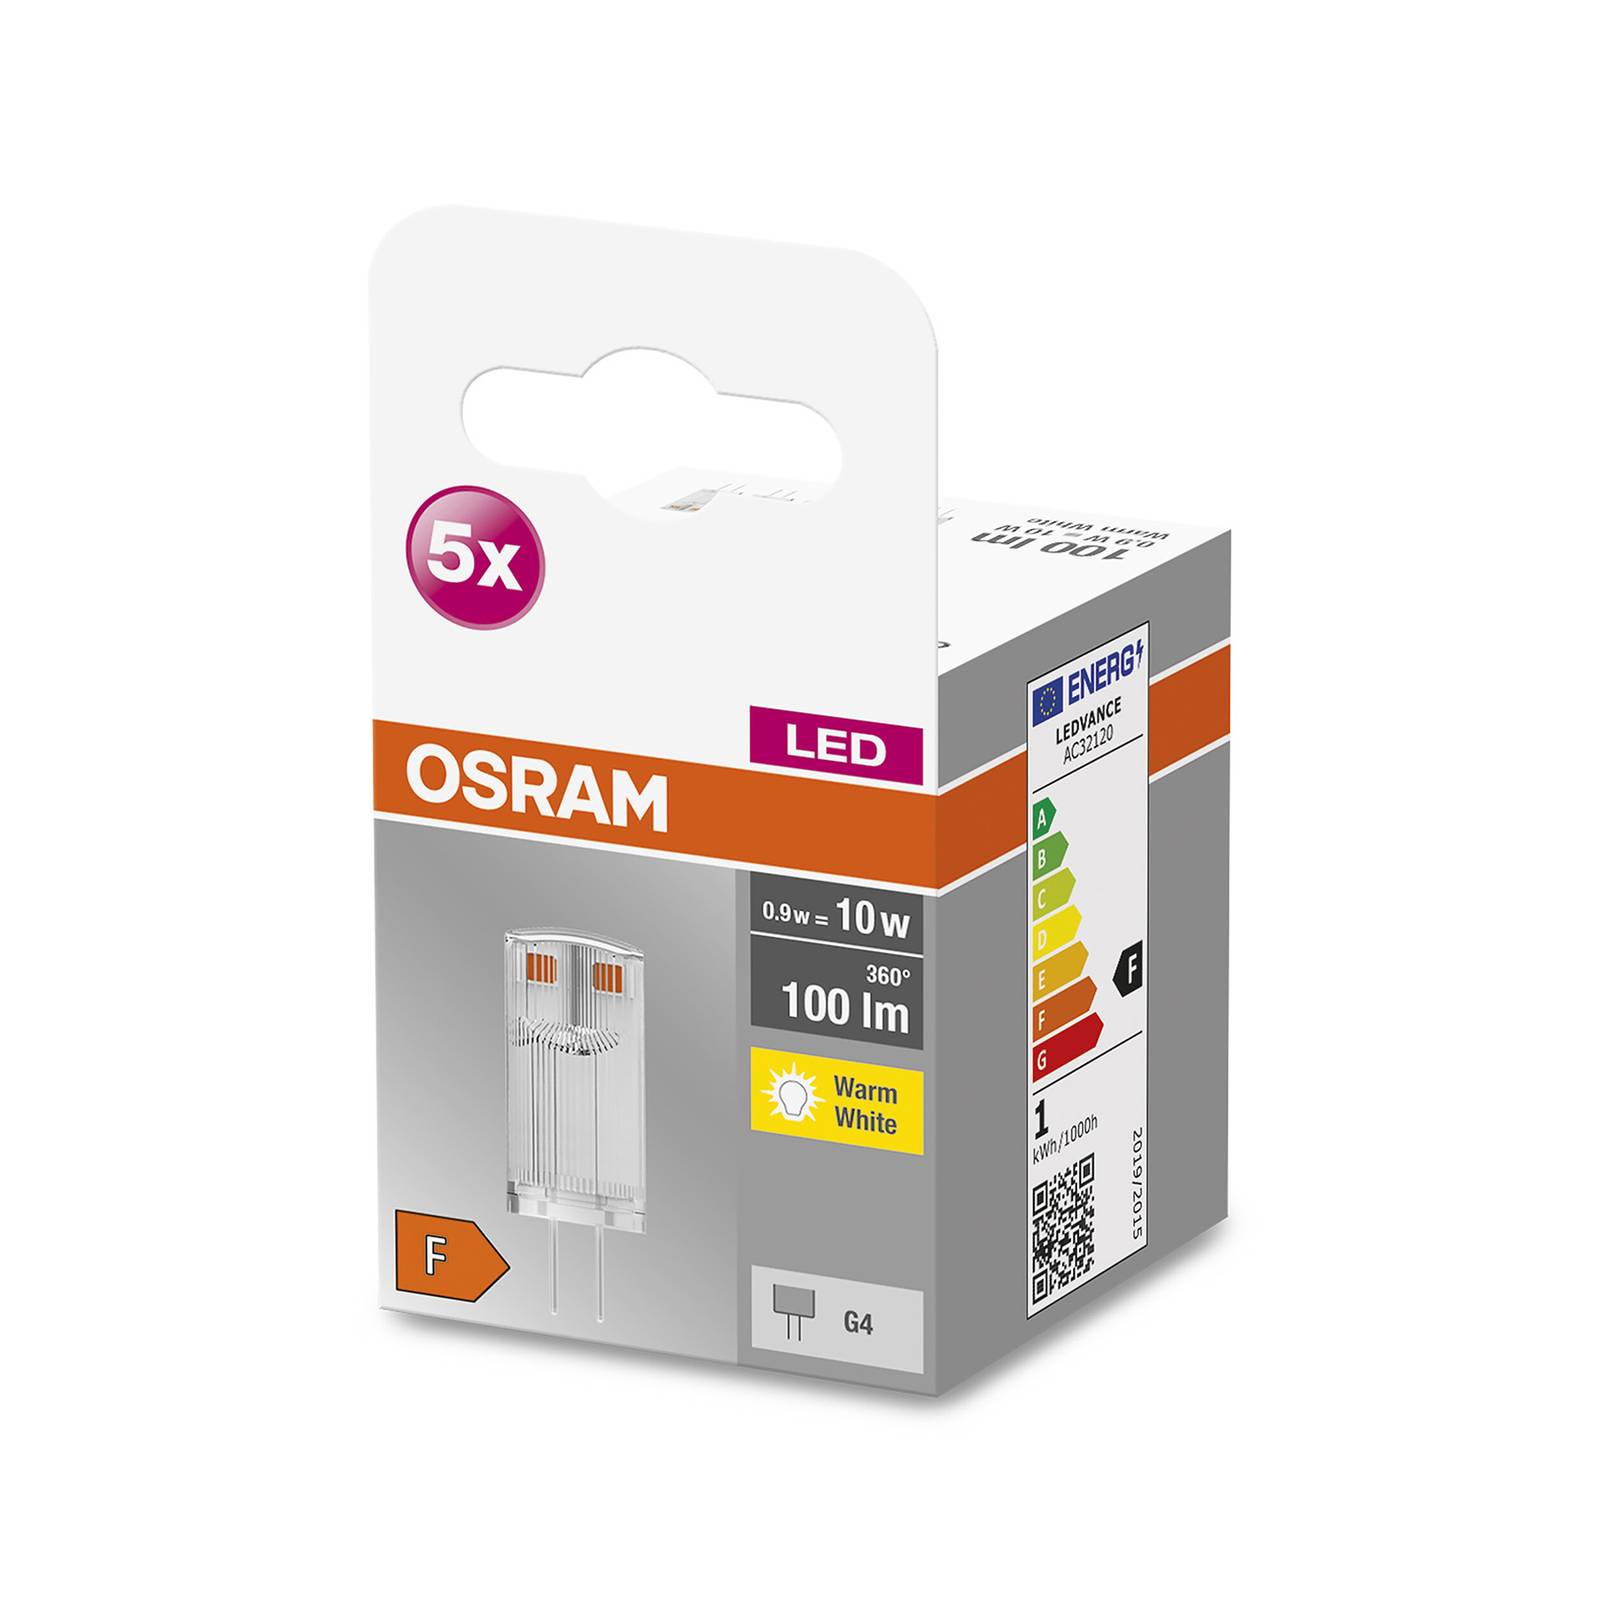 OSRAM Base PIN LED kapszula G4 0,9 W 100 lm 5-ös